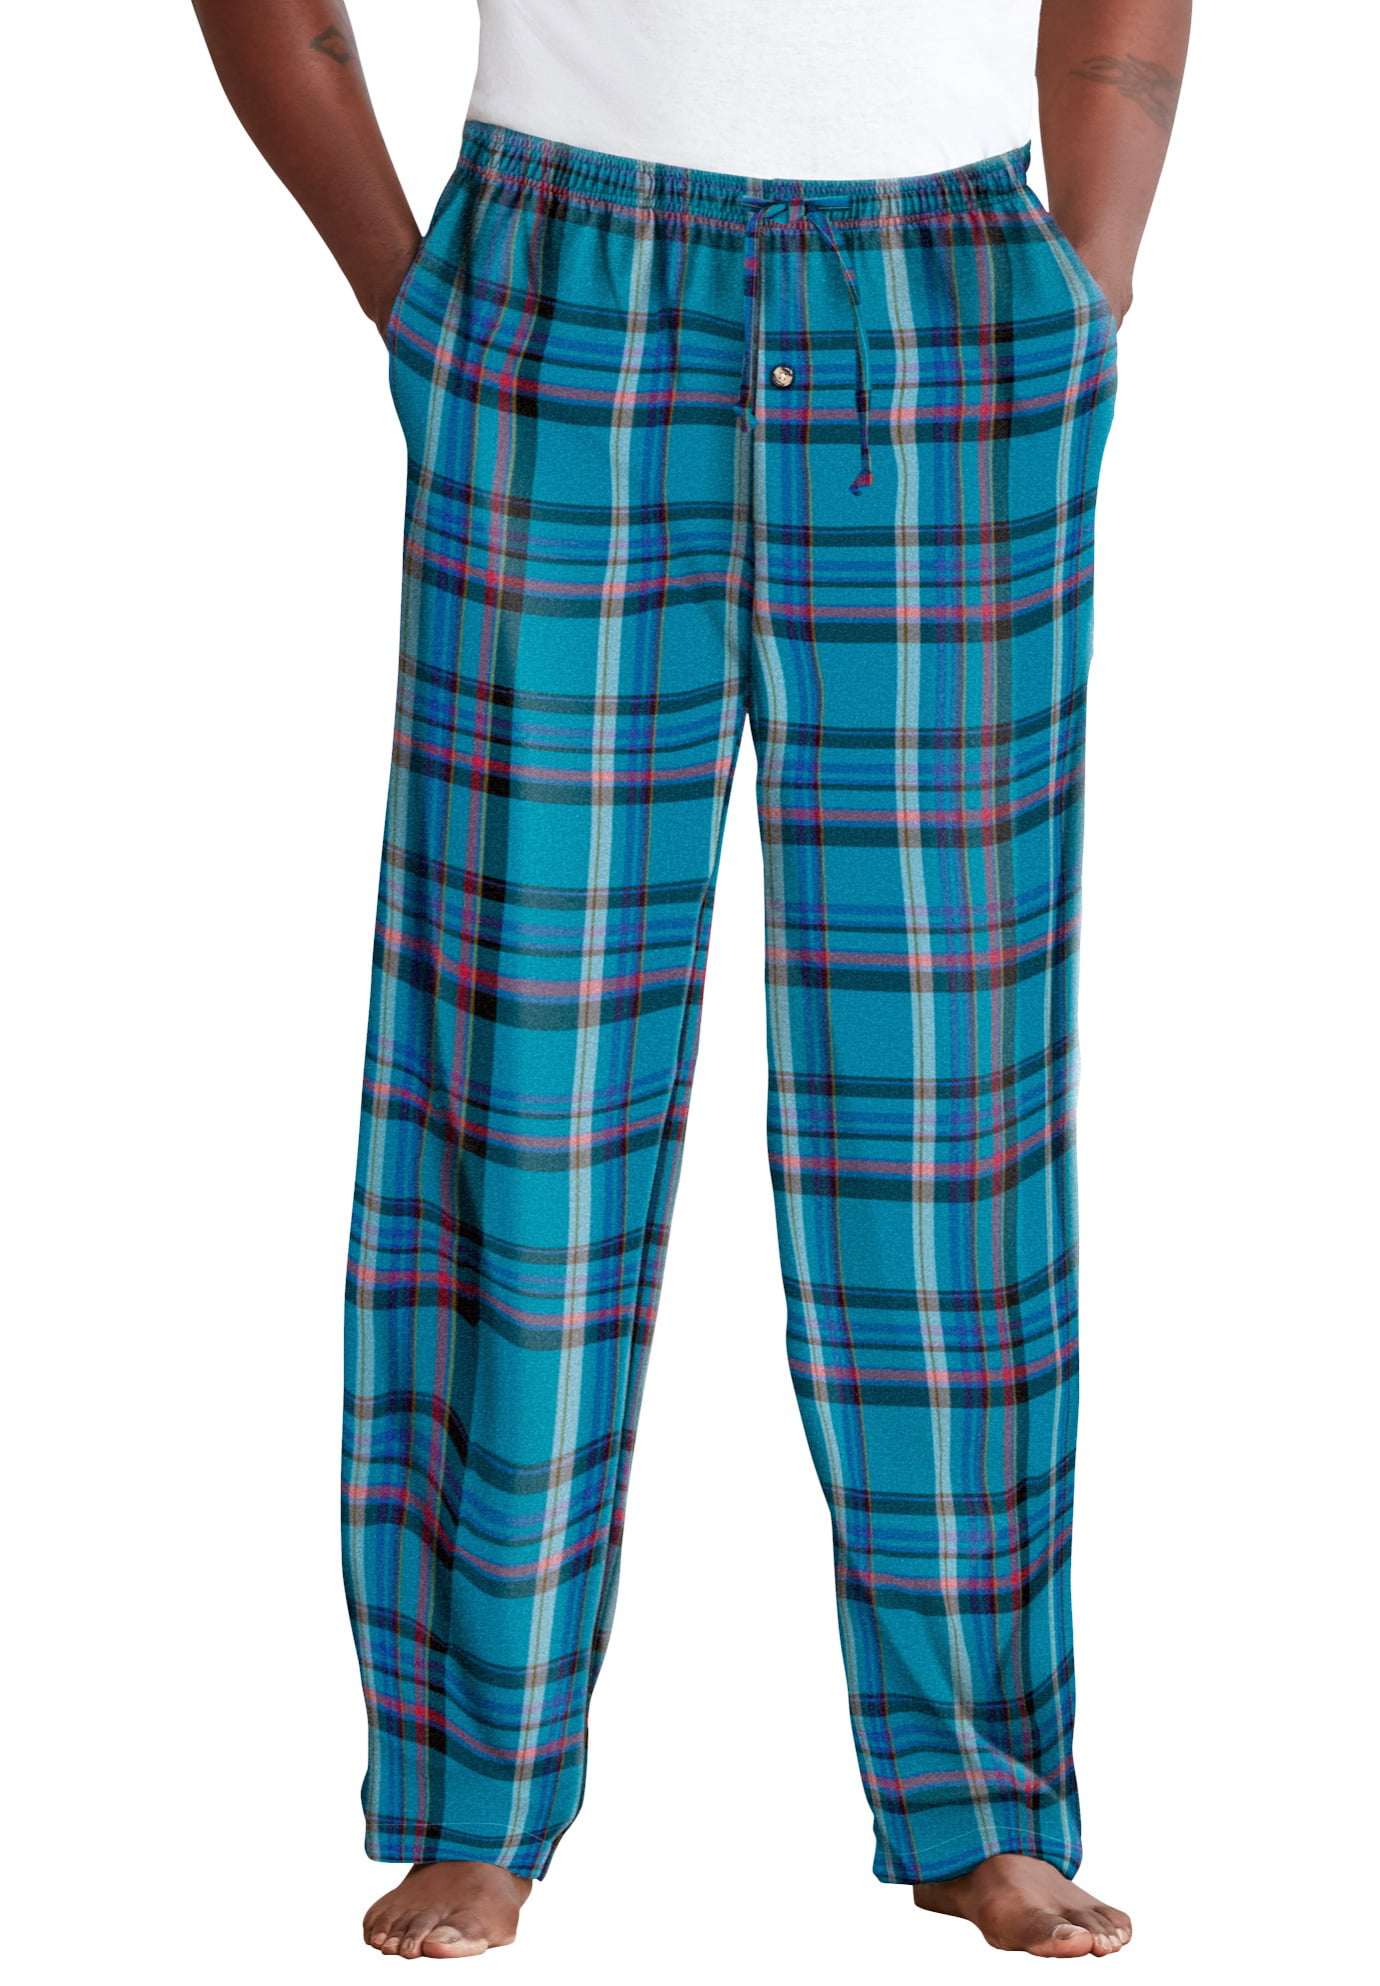 DARESAY Multipack of Men’s Microfleece Pajama Pants/Lounge Wear with Pockets